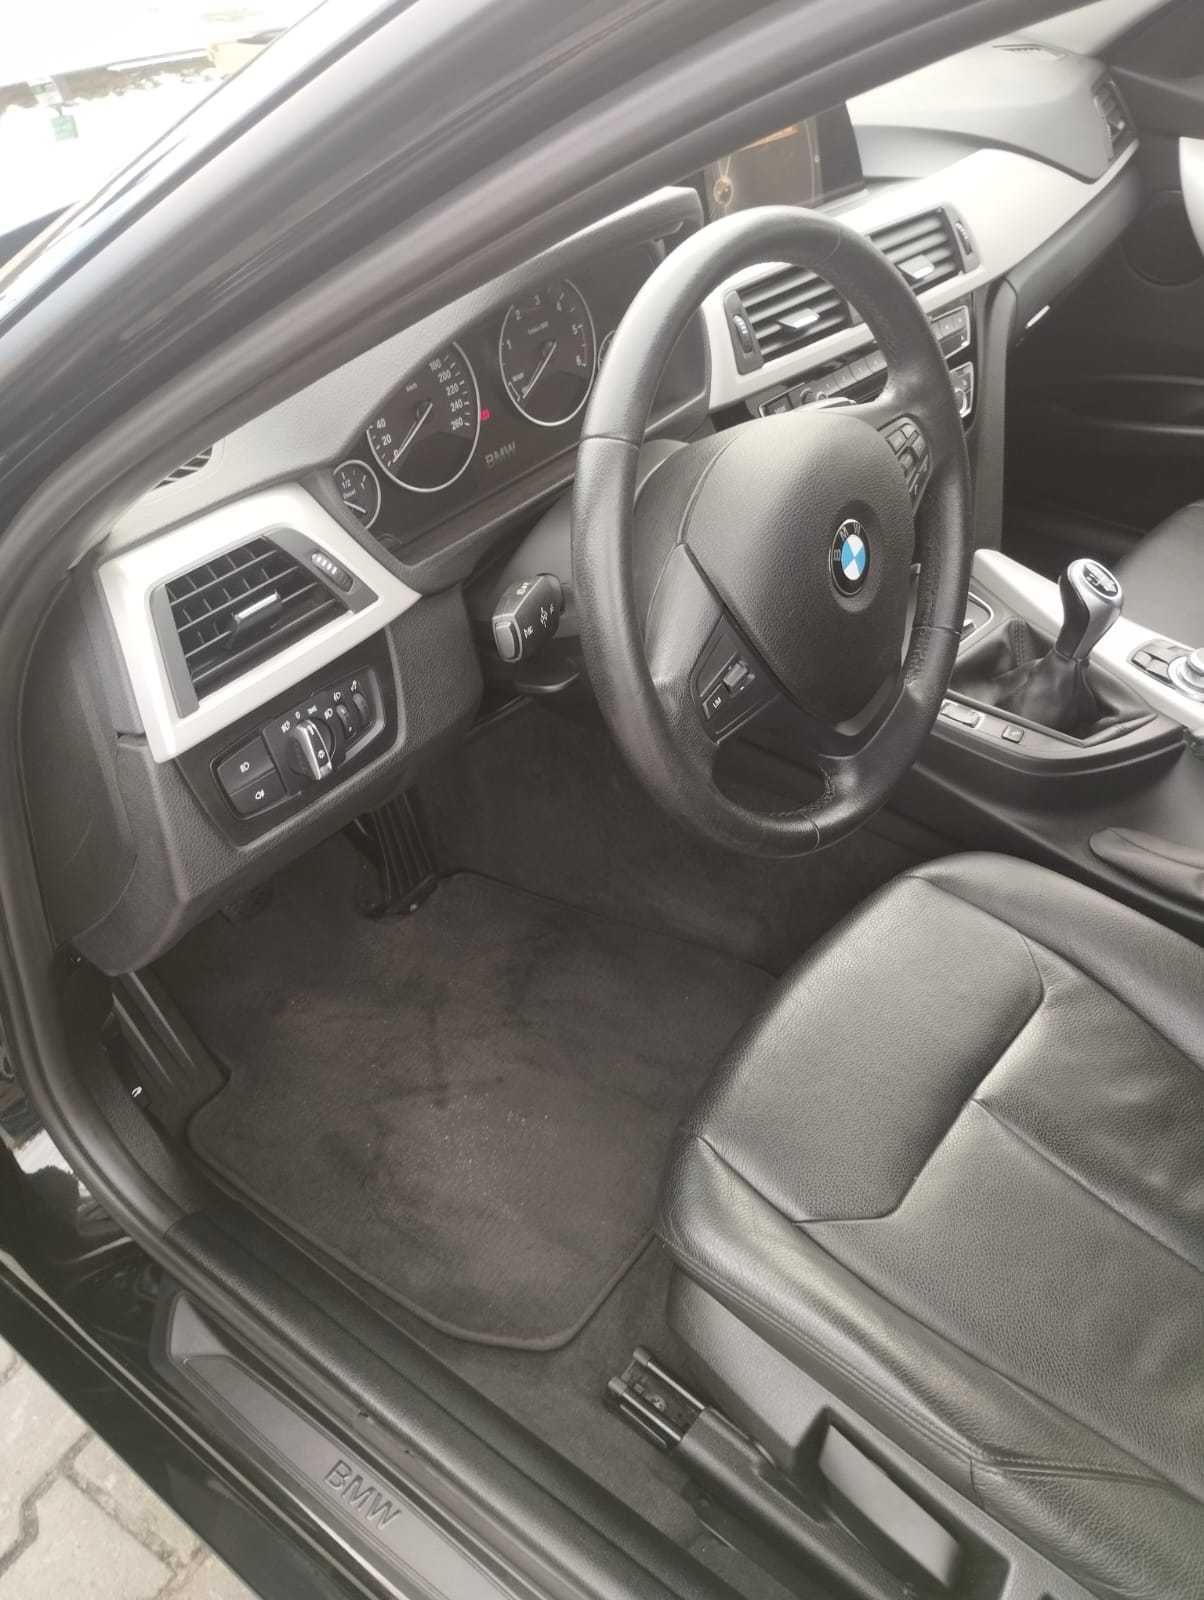 BMW 3 Series 2017 F31 (FL) • 318d MT (150 к.с.) читайте описание.